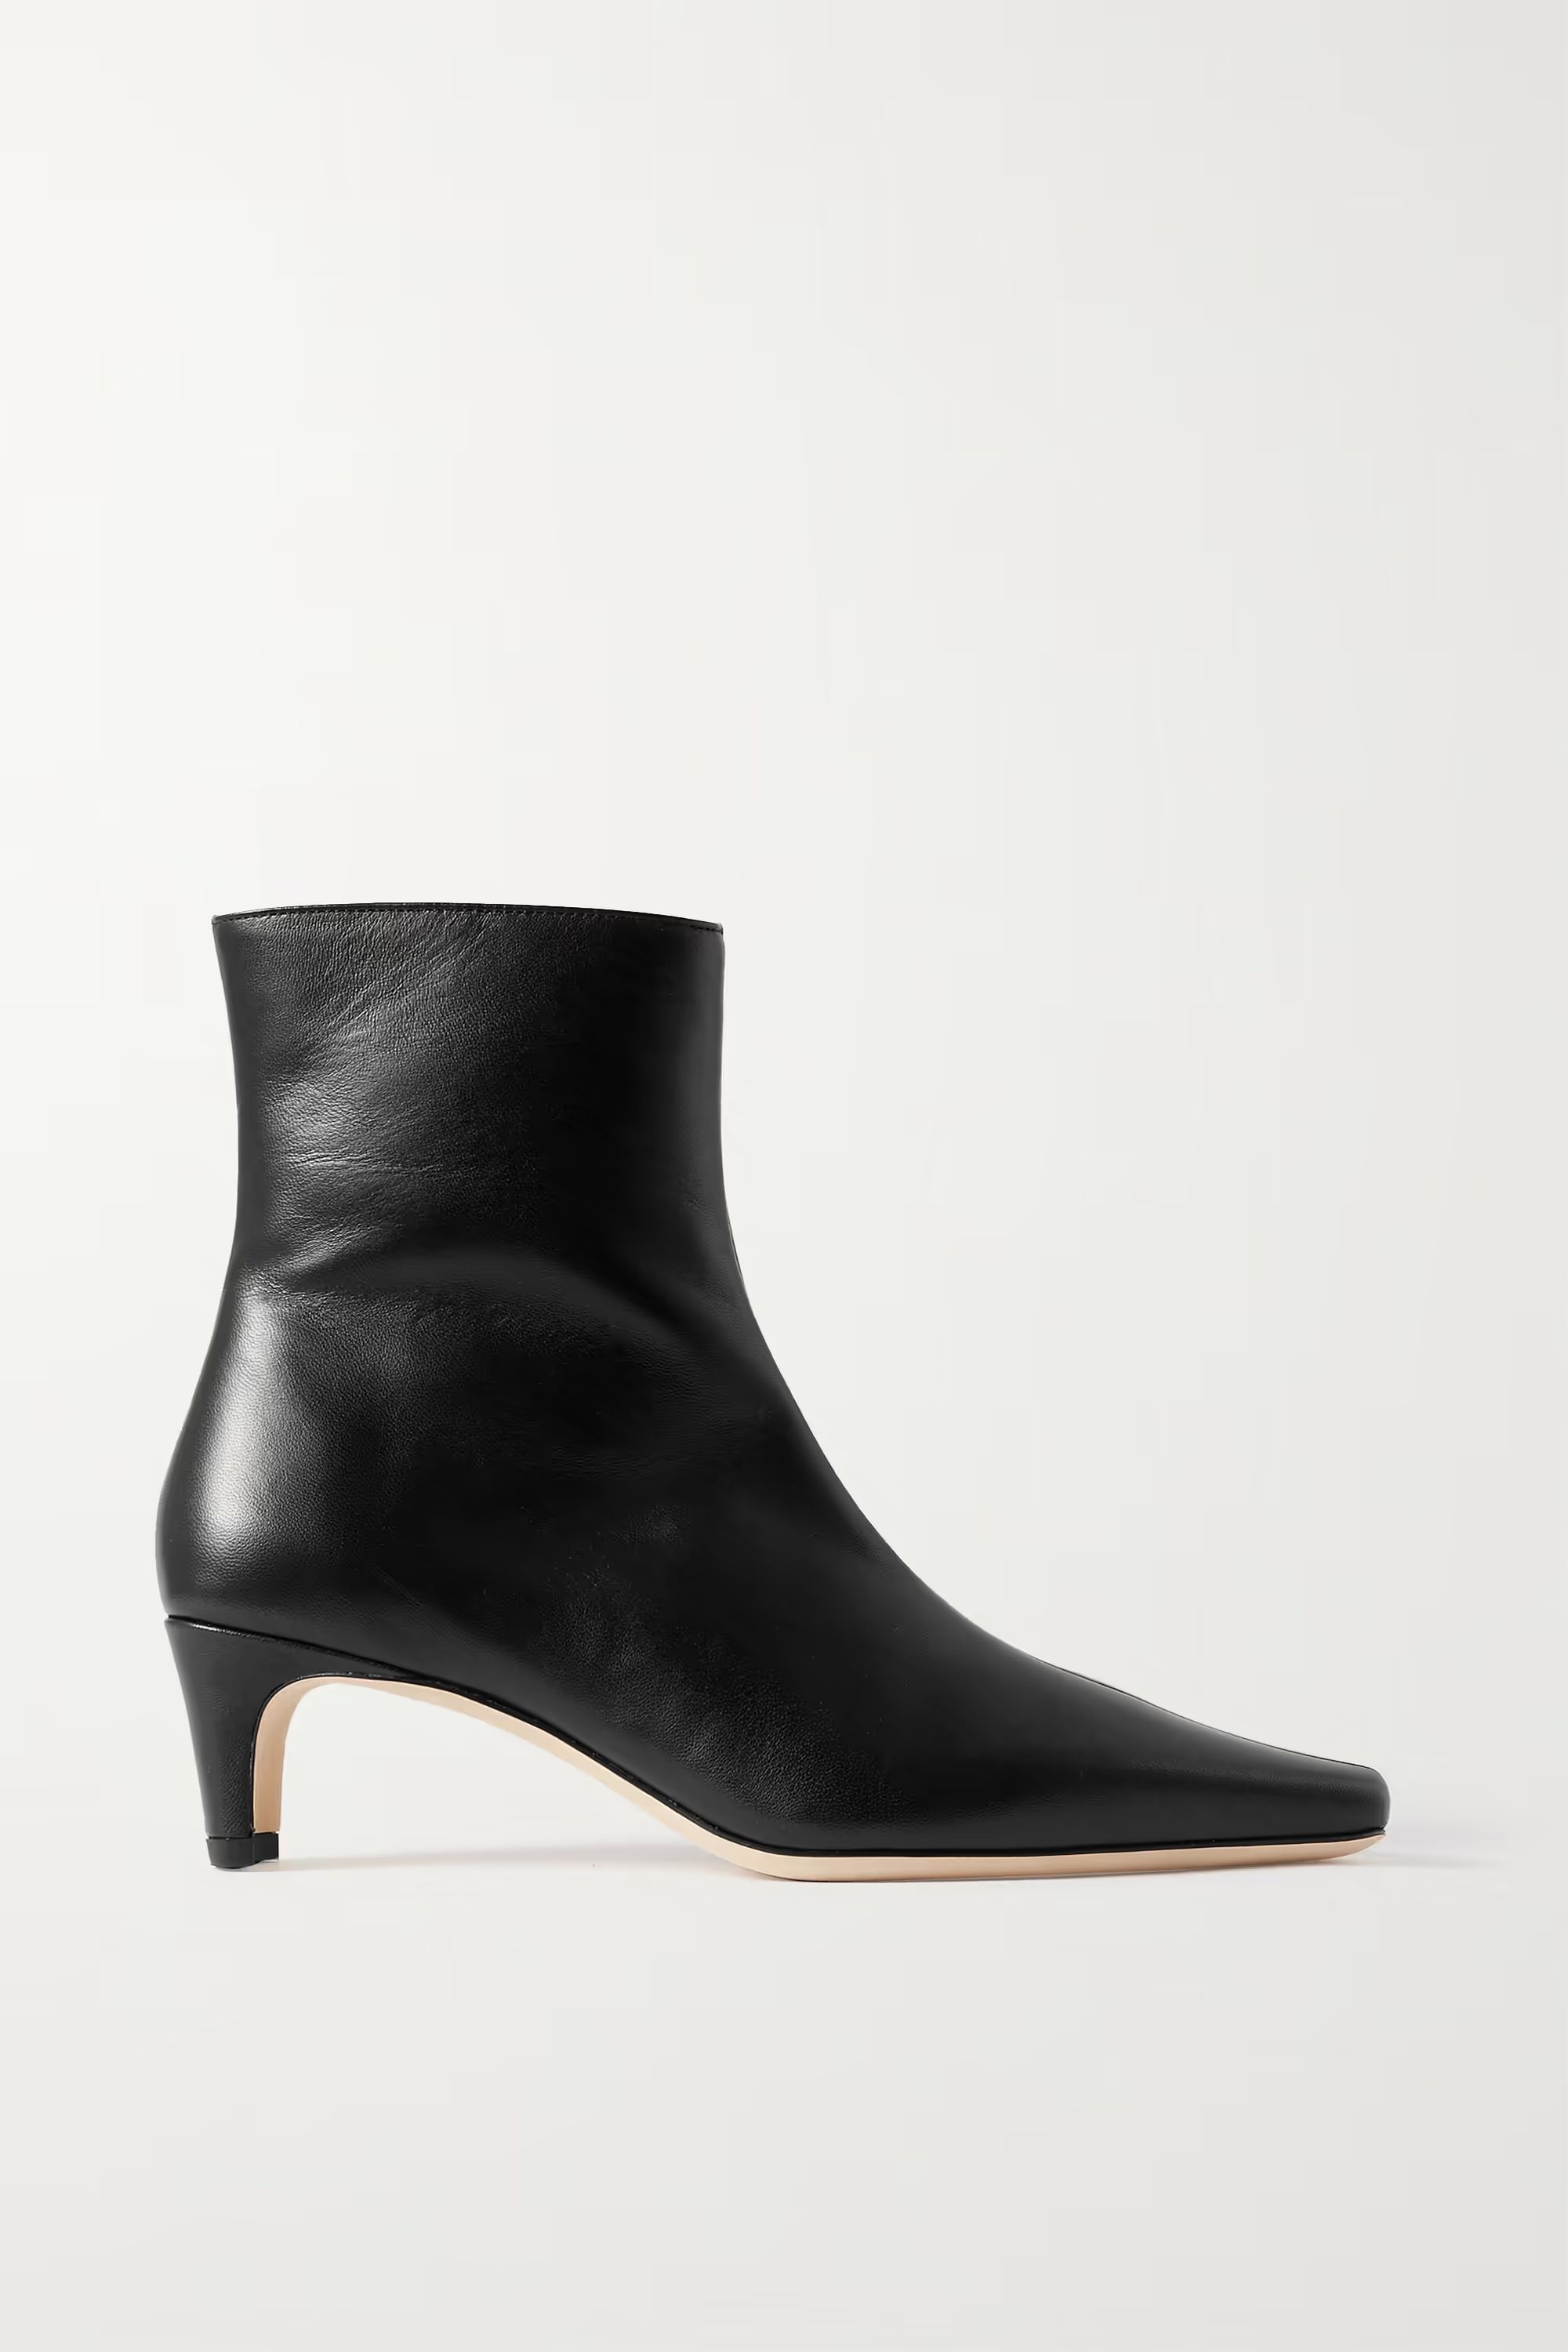 Wally leather ankle boots | NET-A-PORTER (UK & EU)